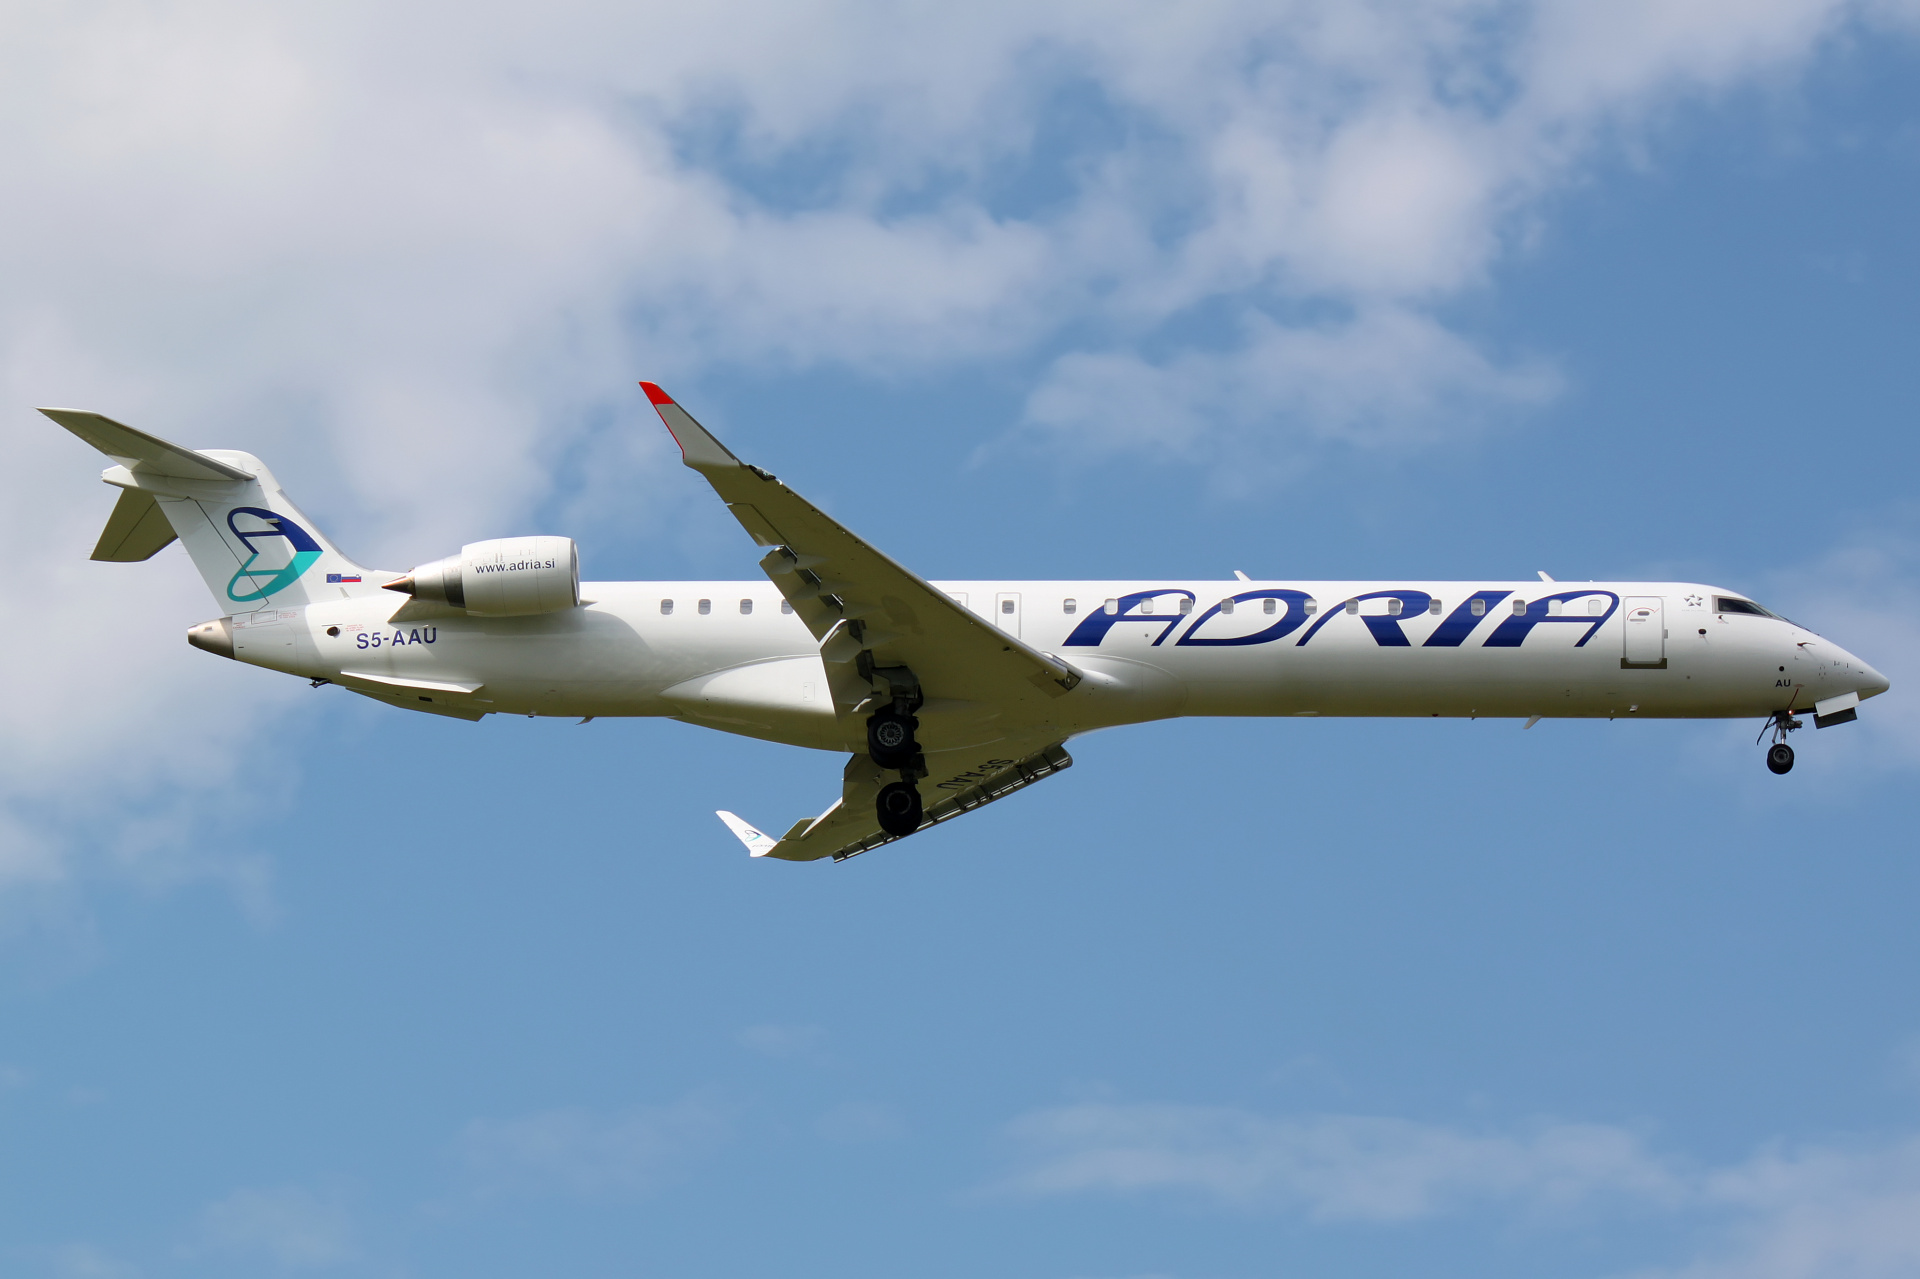 S5-AAU, Adria Airways (Aircraft » EPWA Spotting » Mitsubishi Regional Jet » CRJ-900)